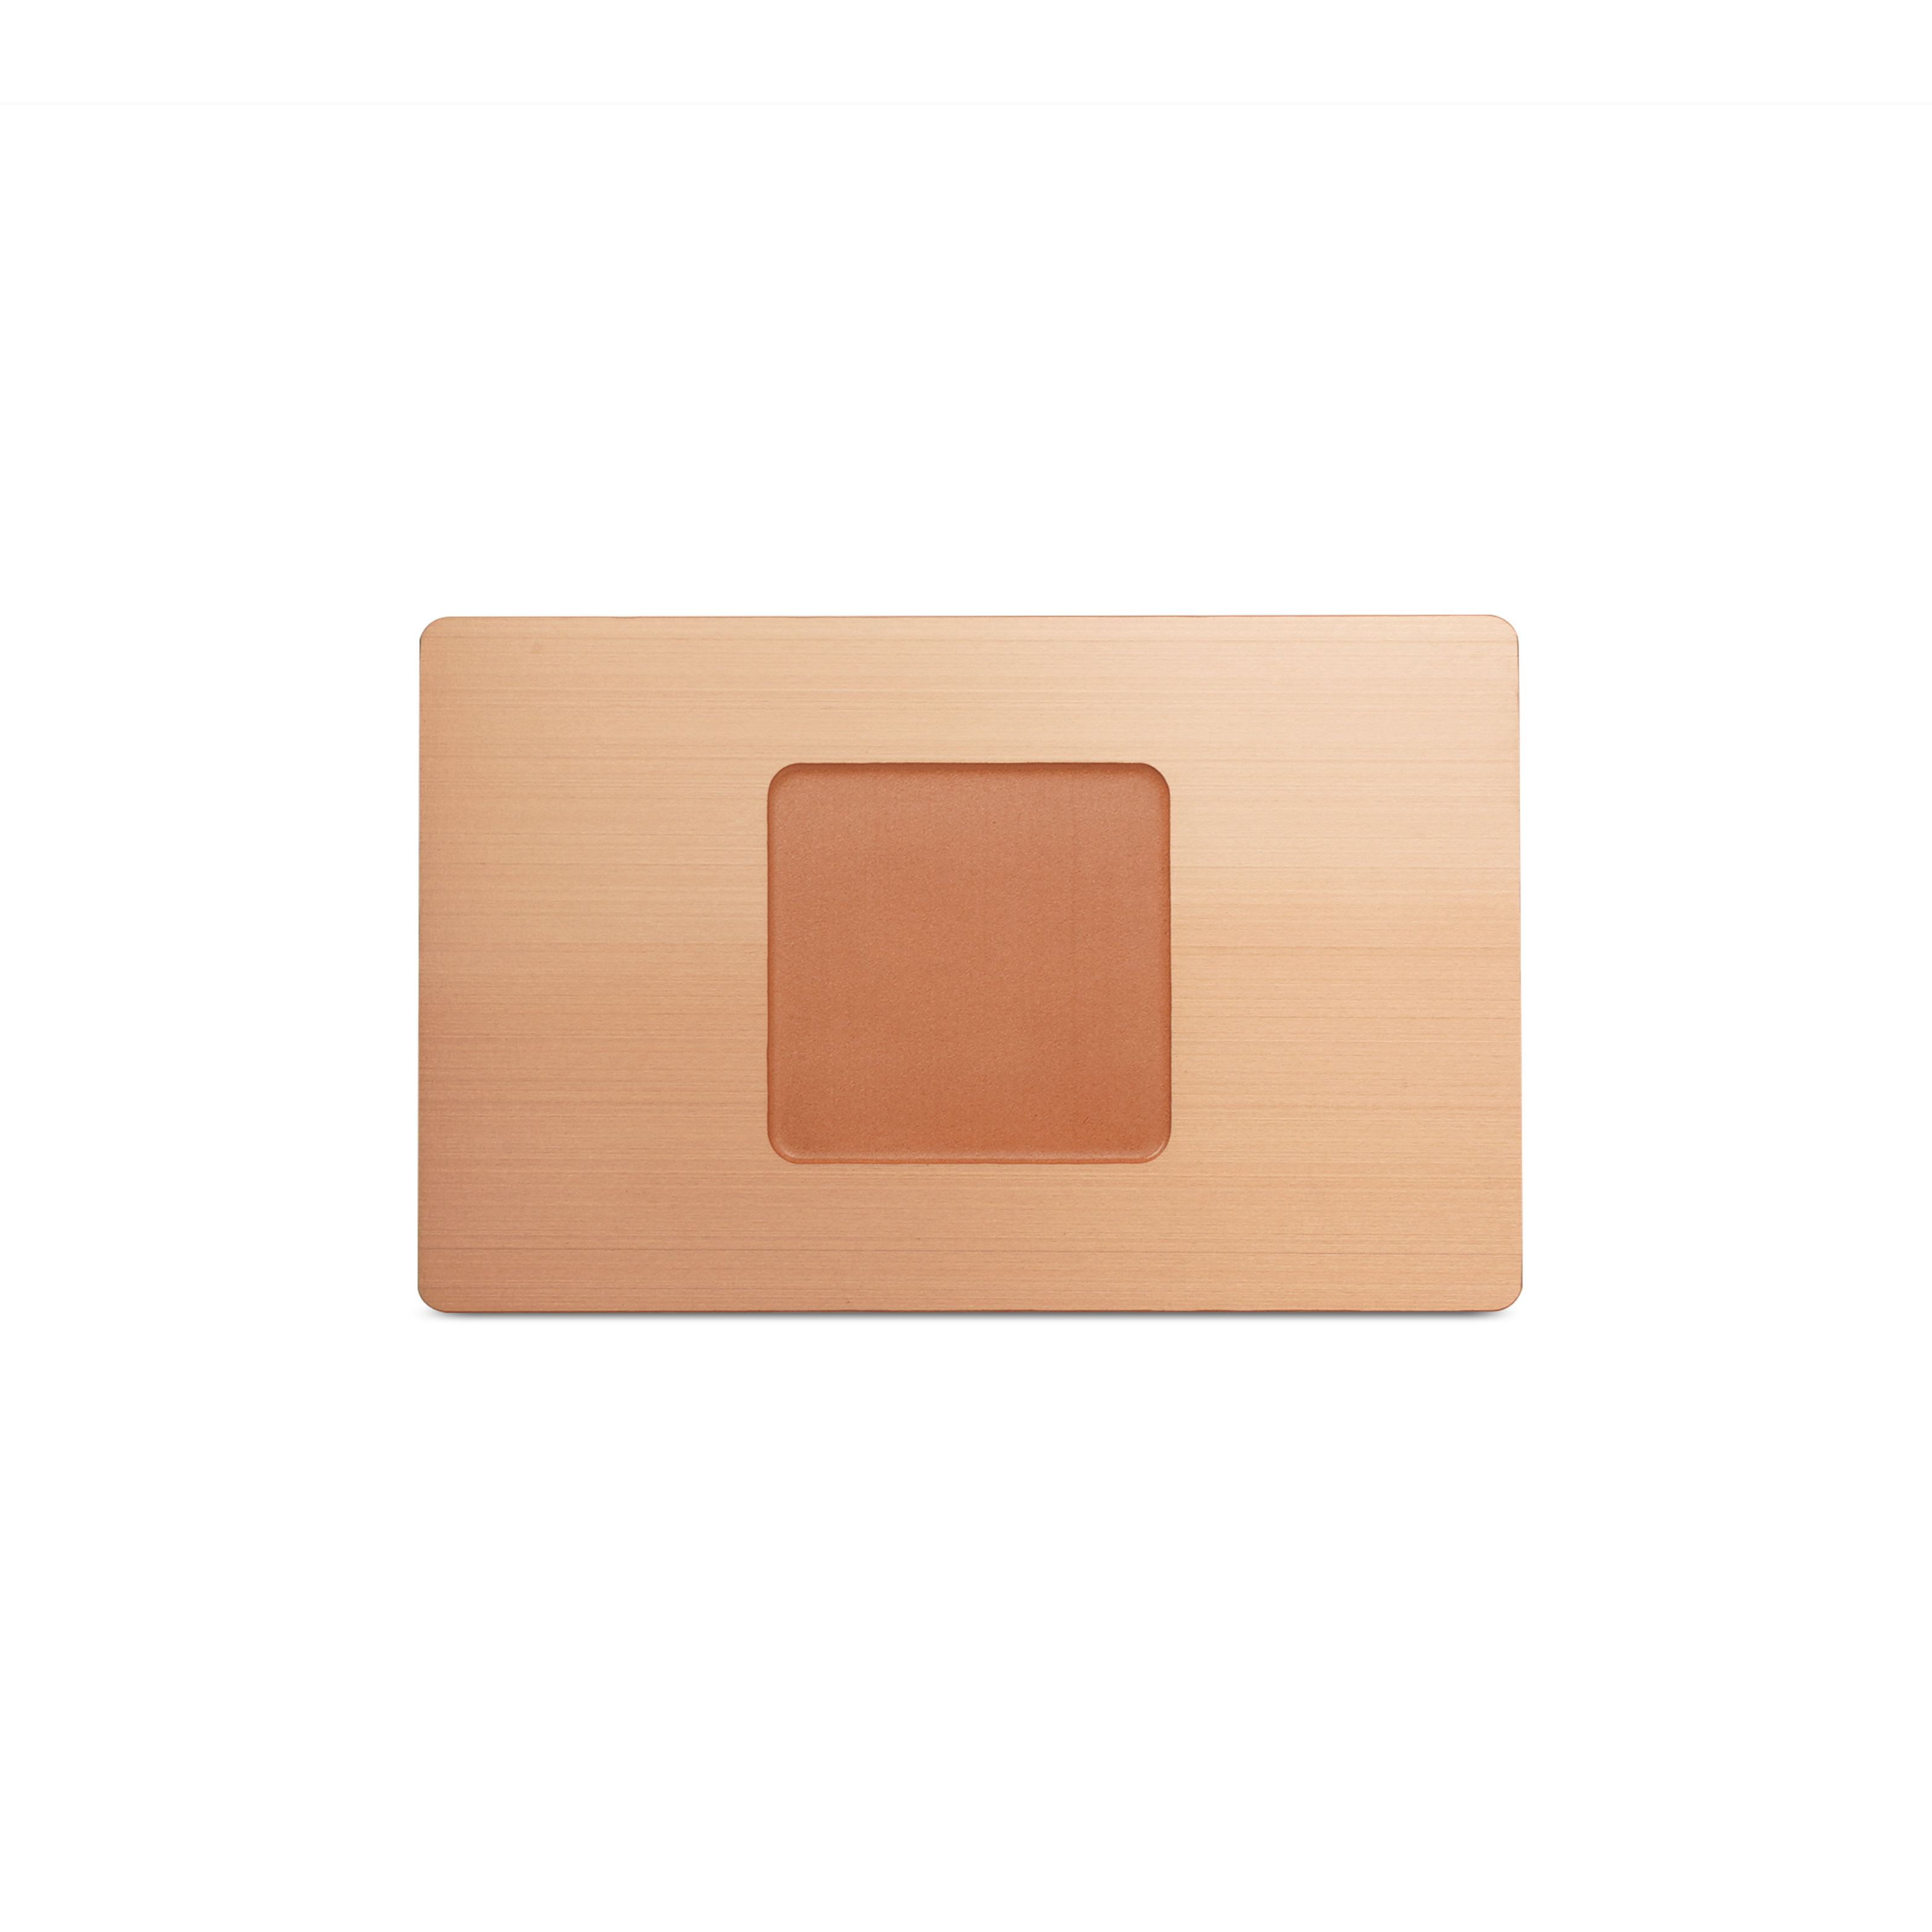 NFC card metal - 85.6 x 54 mm - NTAG213 - 180 byte - rose gold